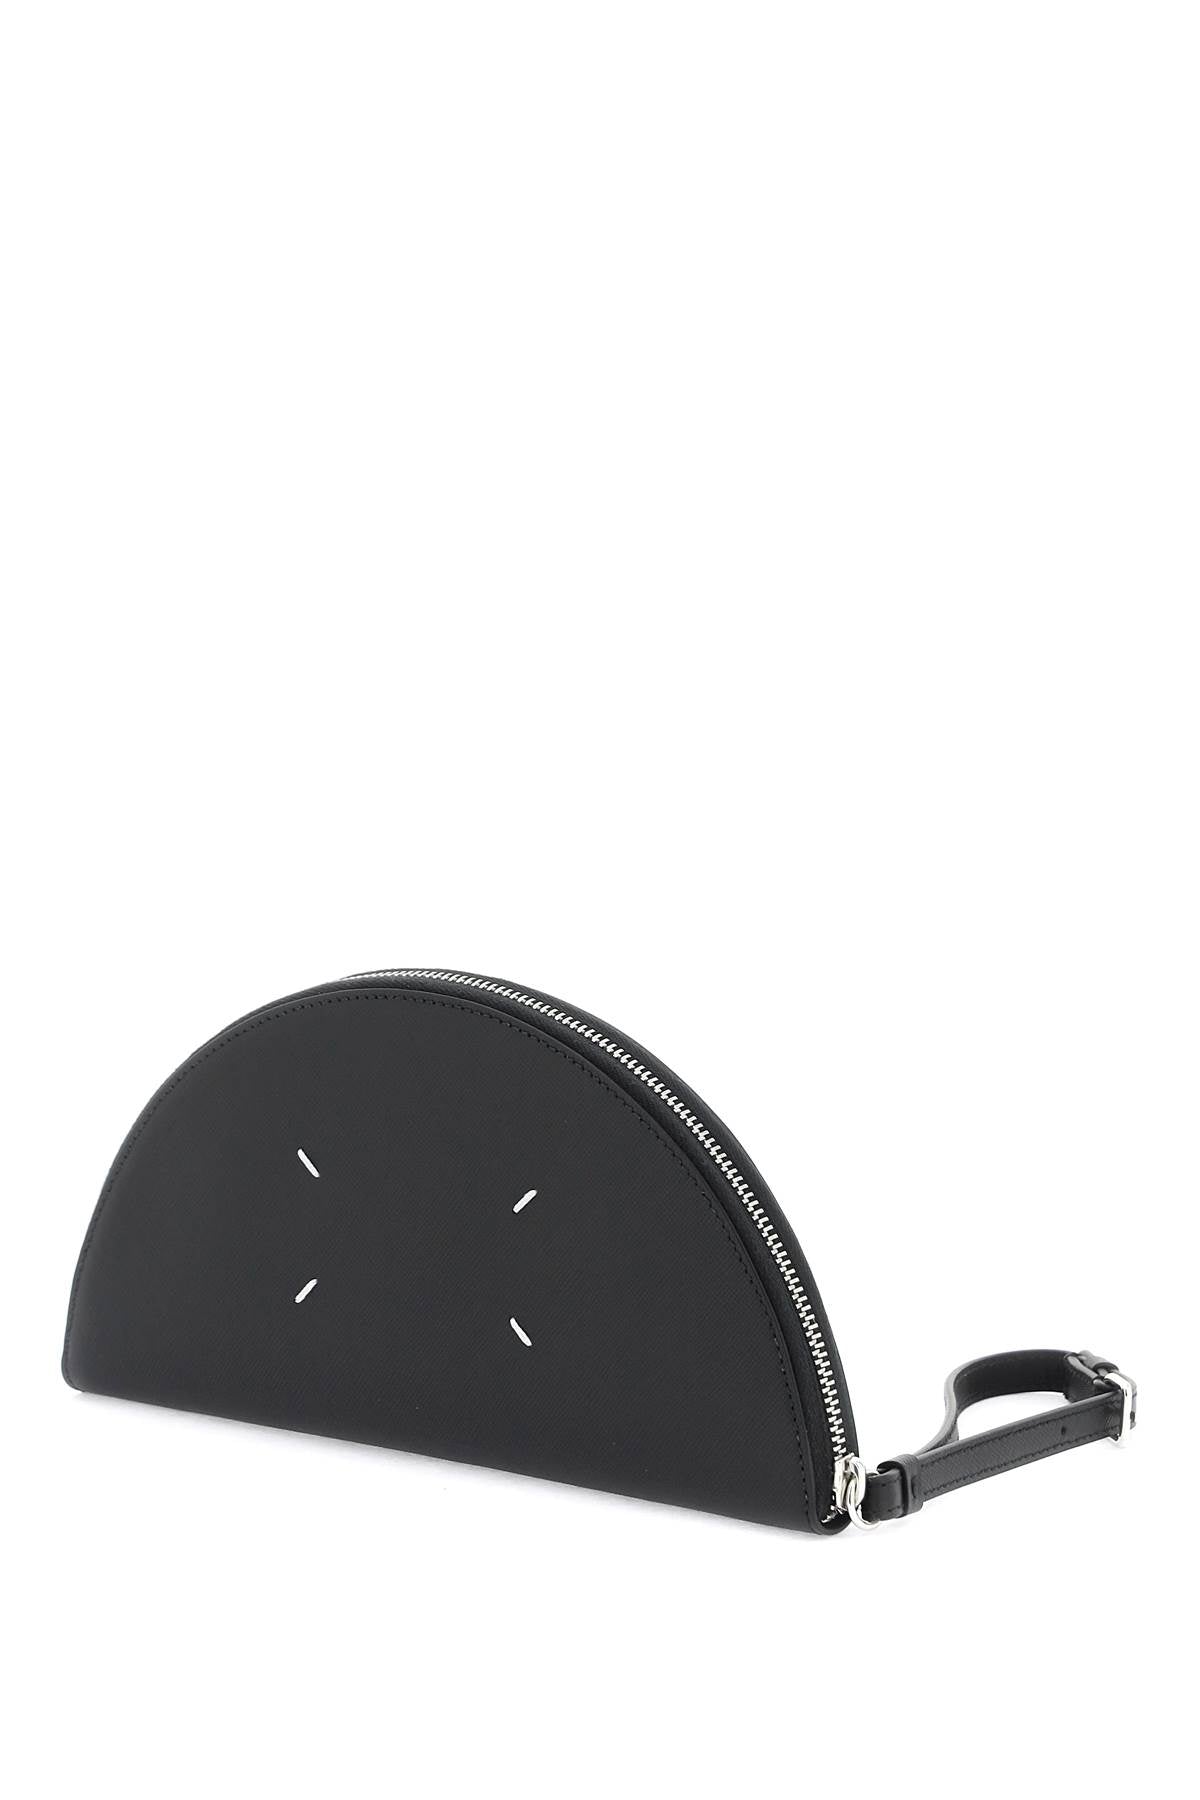 Maison margiela saffiano leather pouch with wrist handle.-1